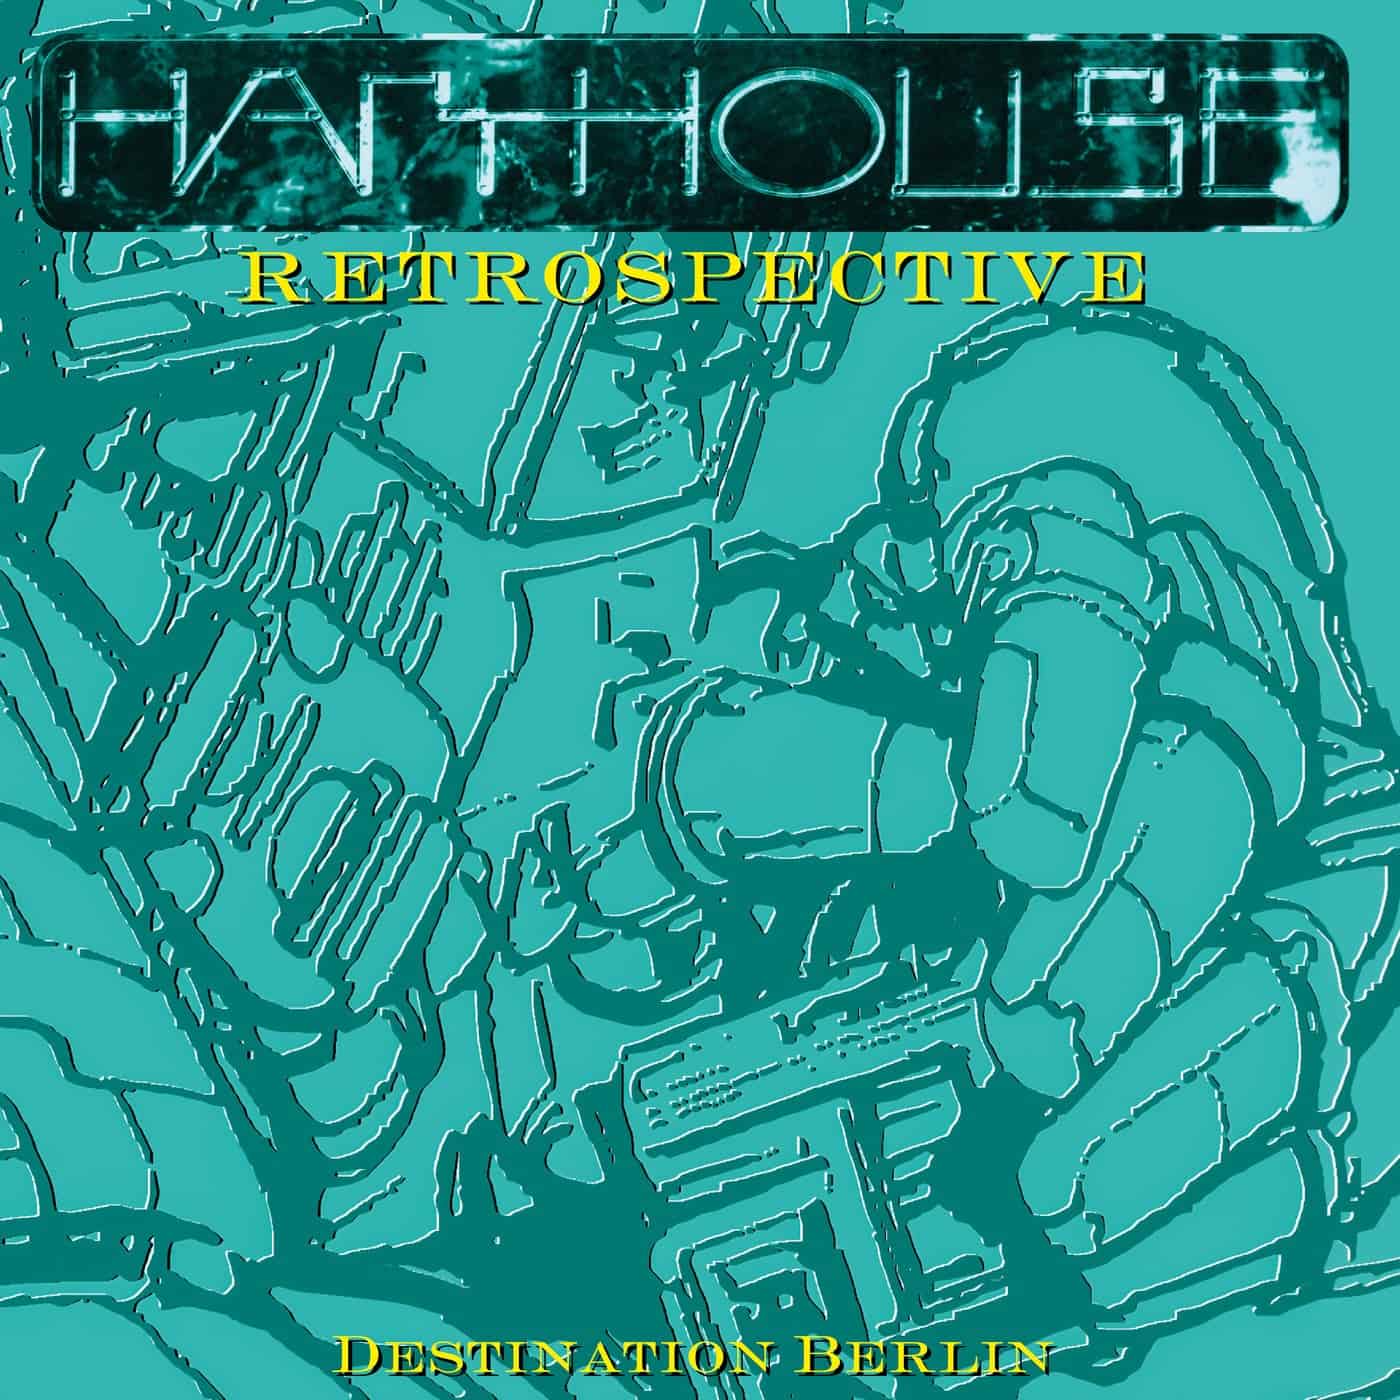 Download VA - Harthouse Retrospective (Destination Berlin) on Electrobuzz